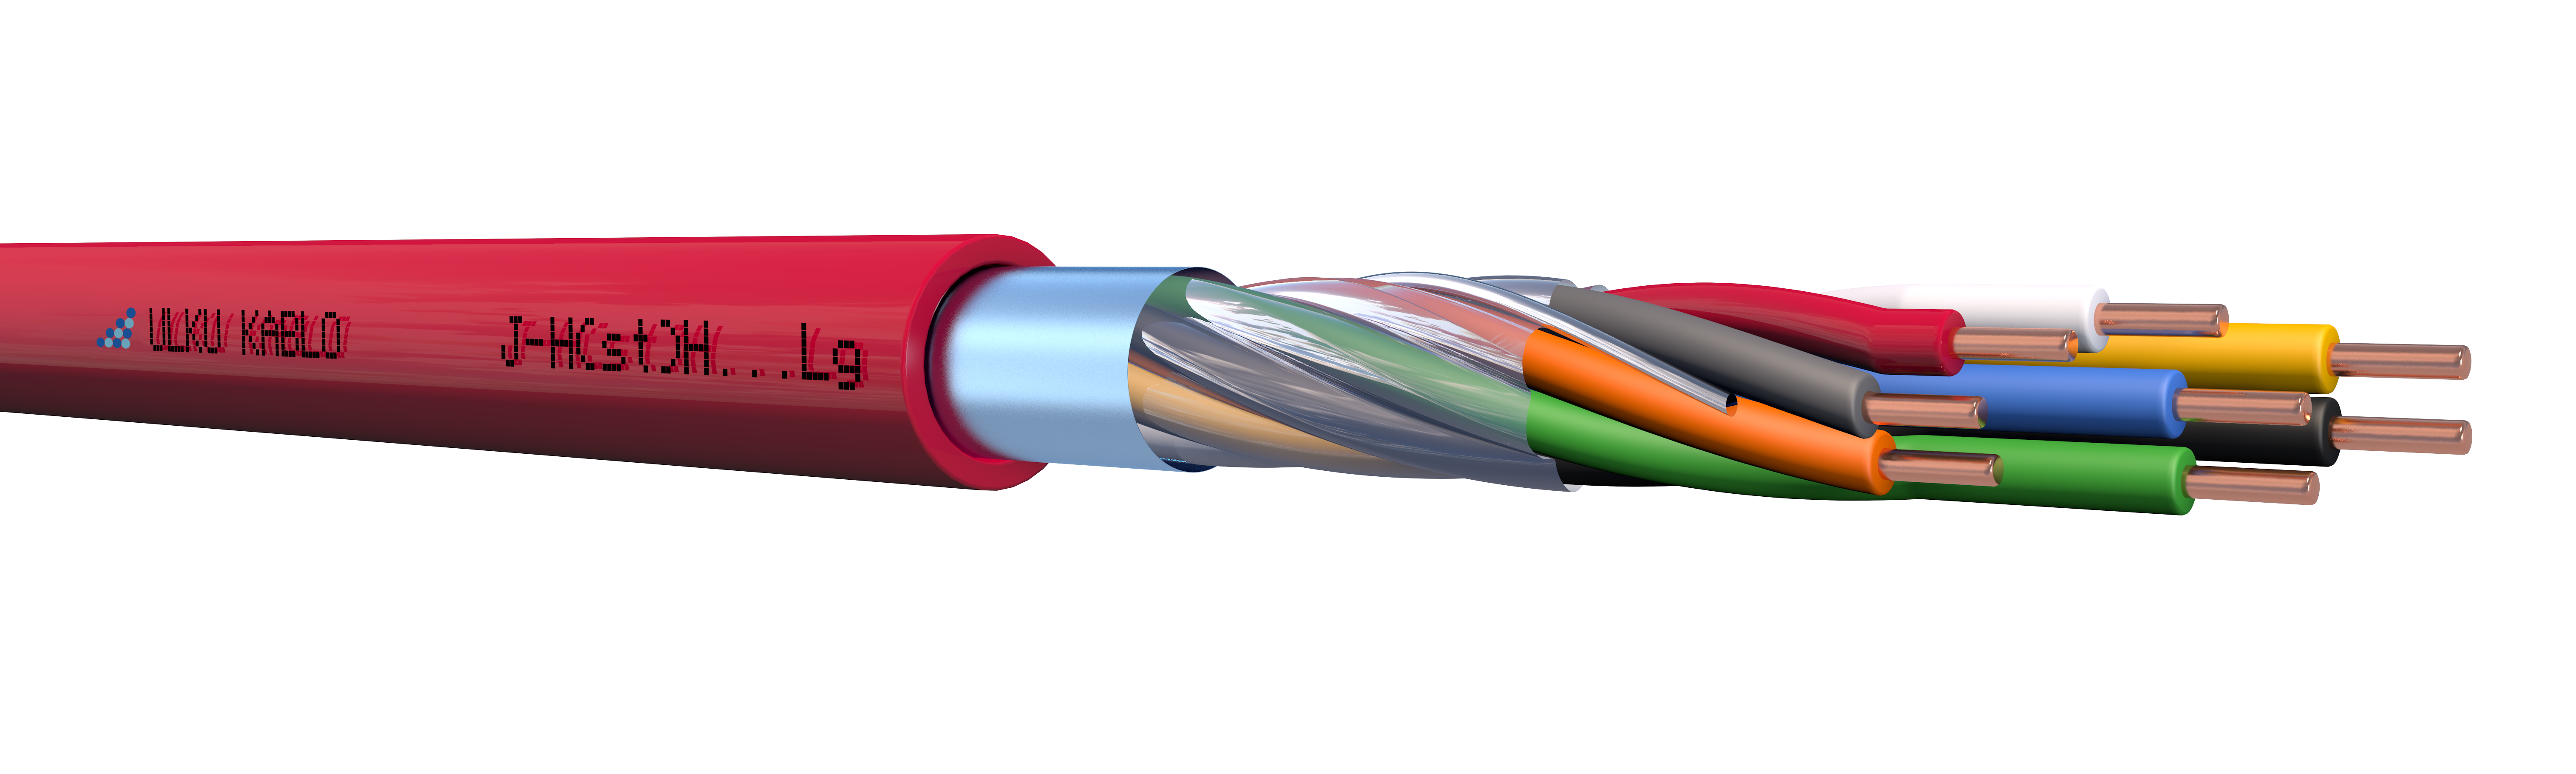 Ülkü Kablo J-H(St)H...Lg 4x2x1,50 mm²+0,80mm